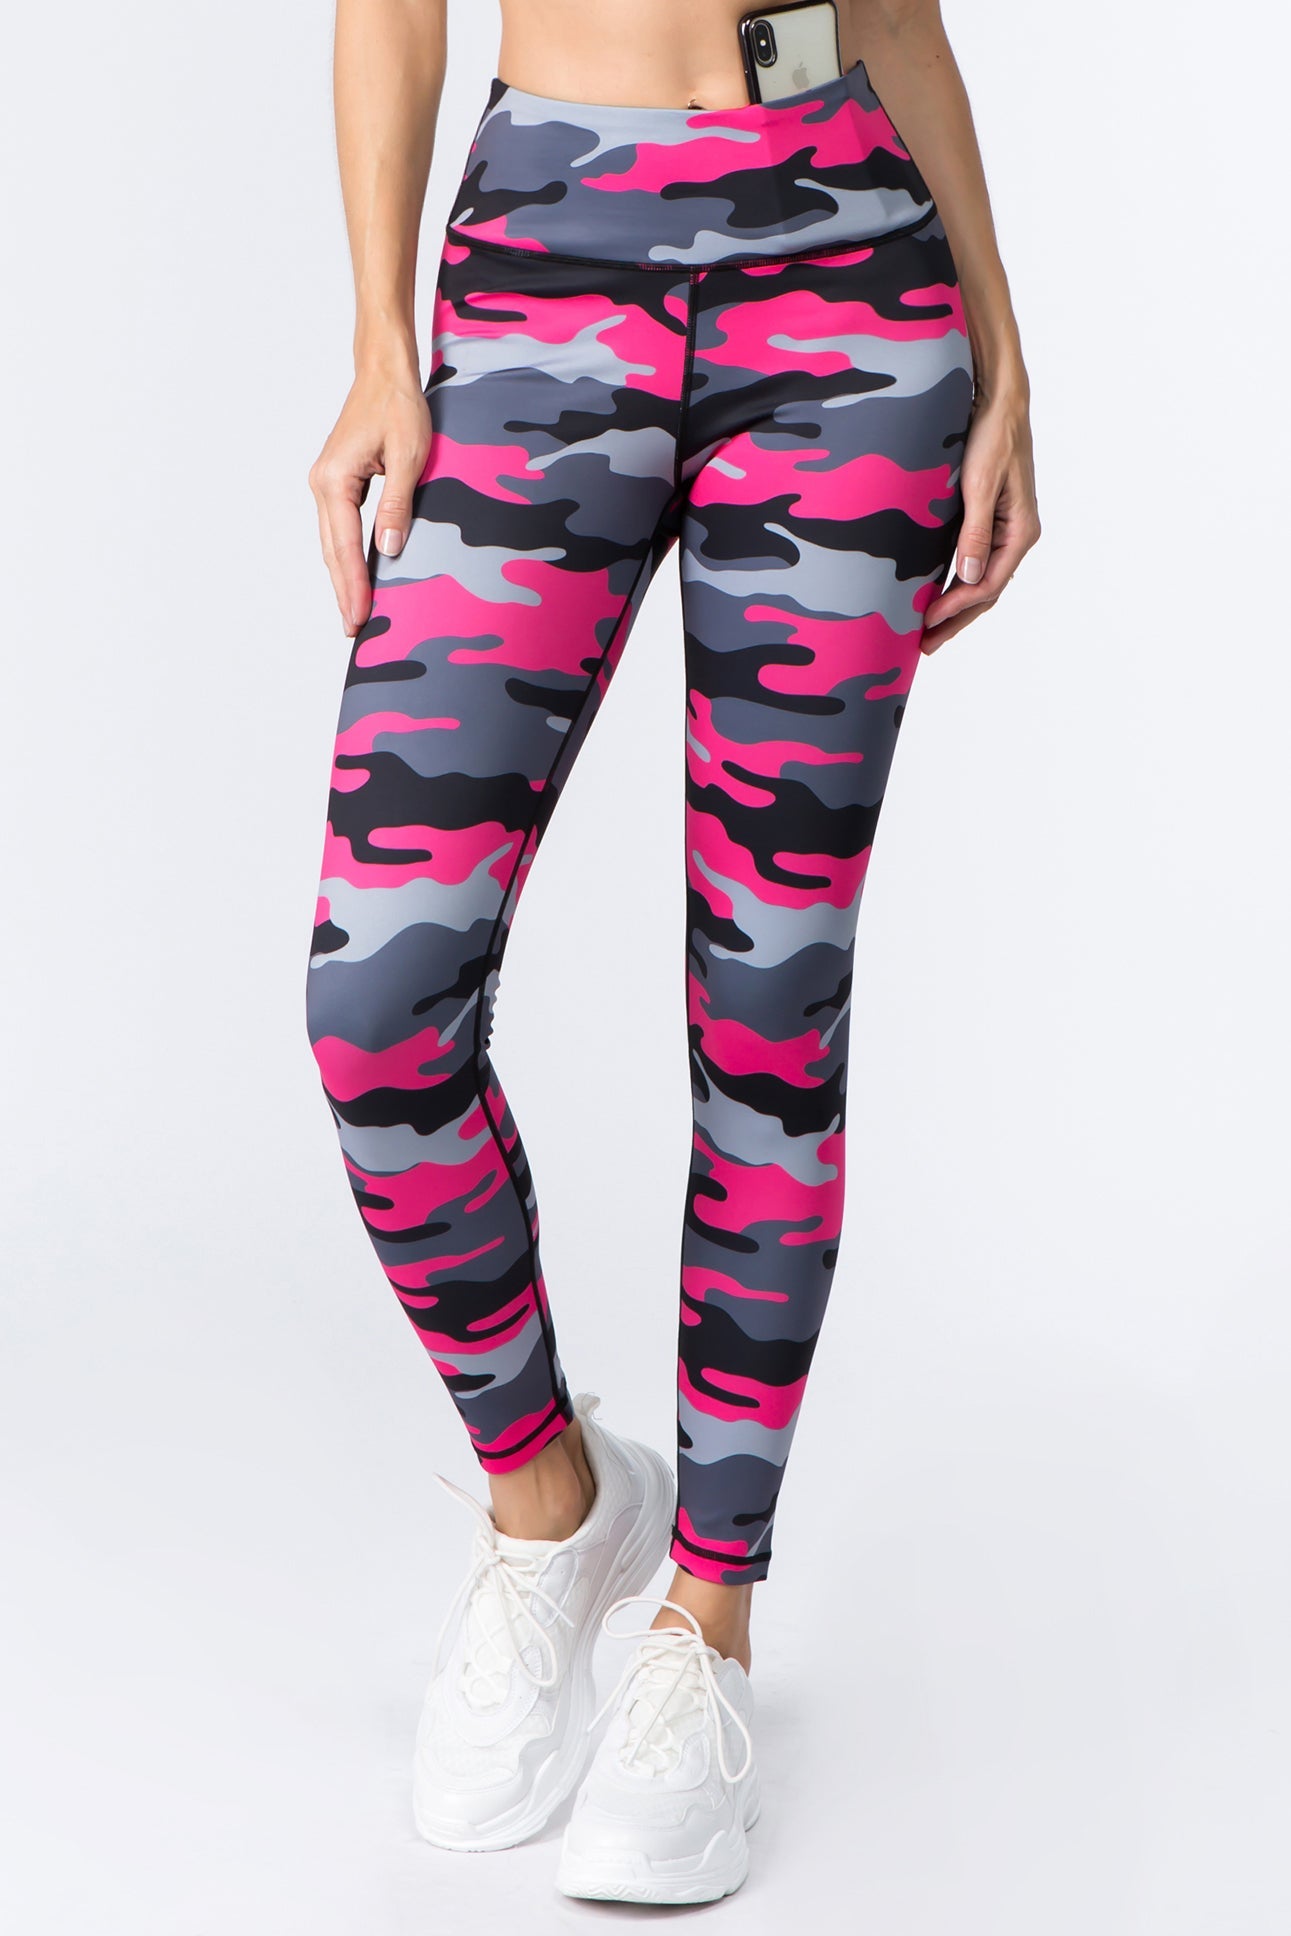 Pop Fit Hot Pink Camo Leggings w/Pockets NWT SM – Karnas Design Studio